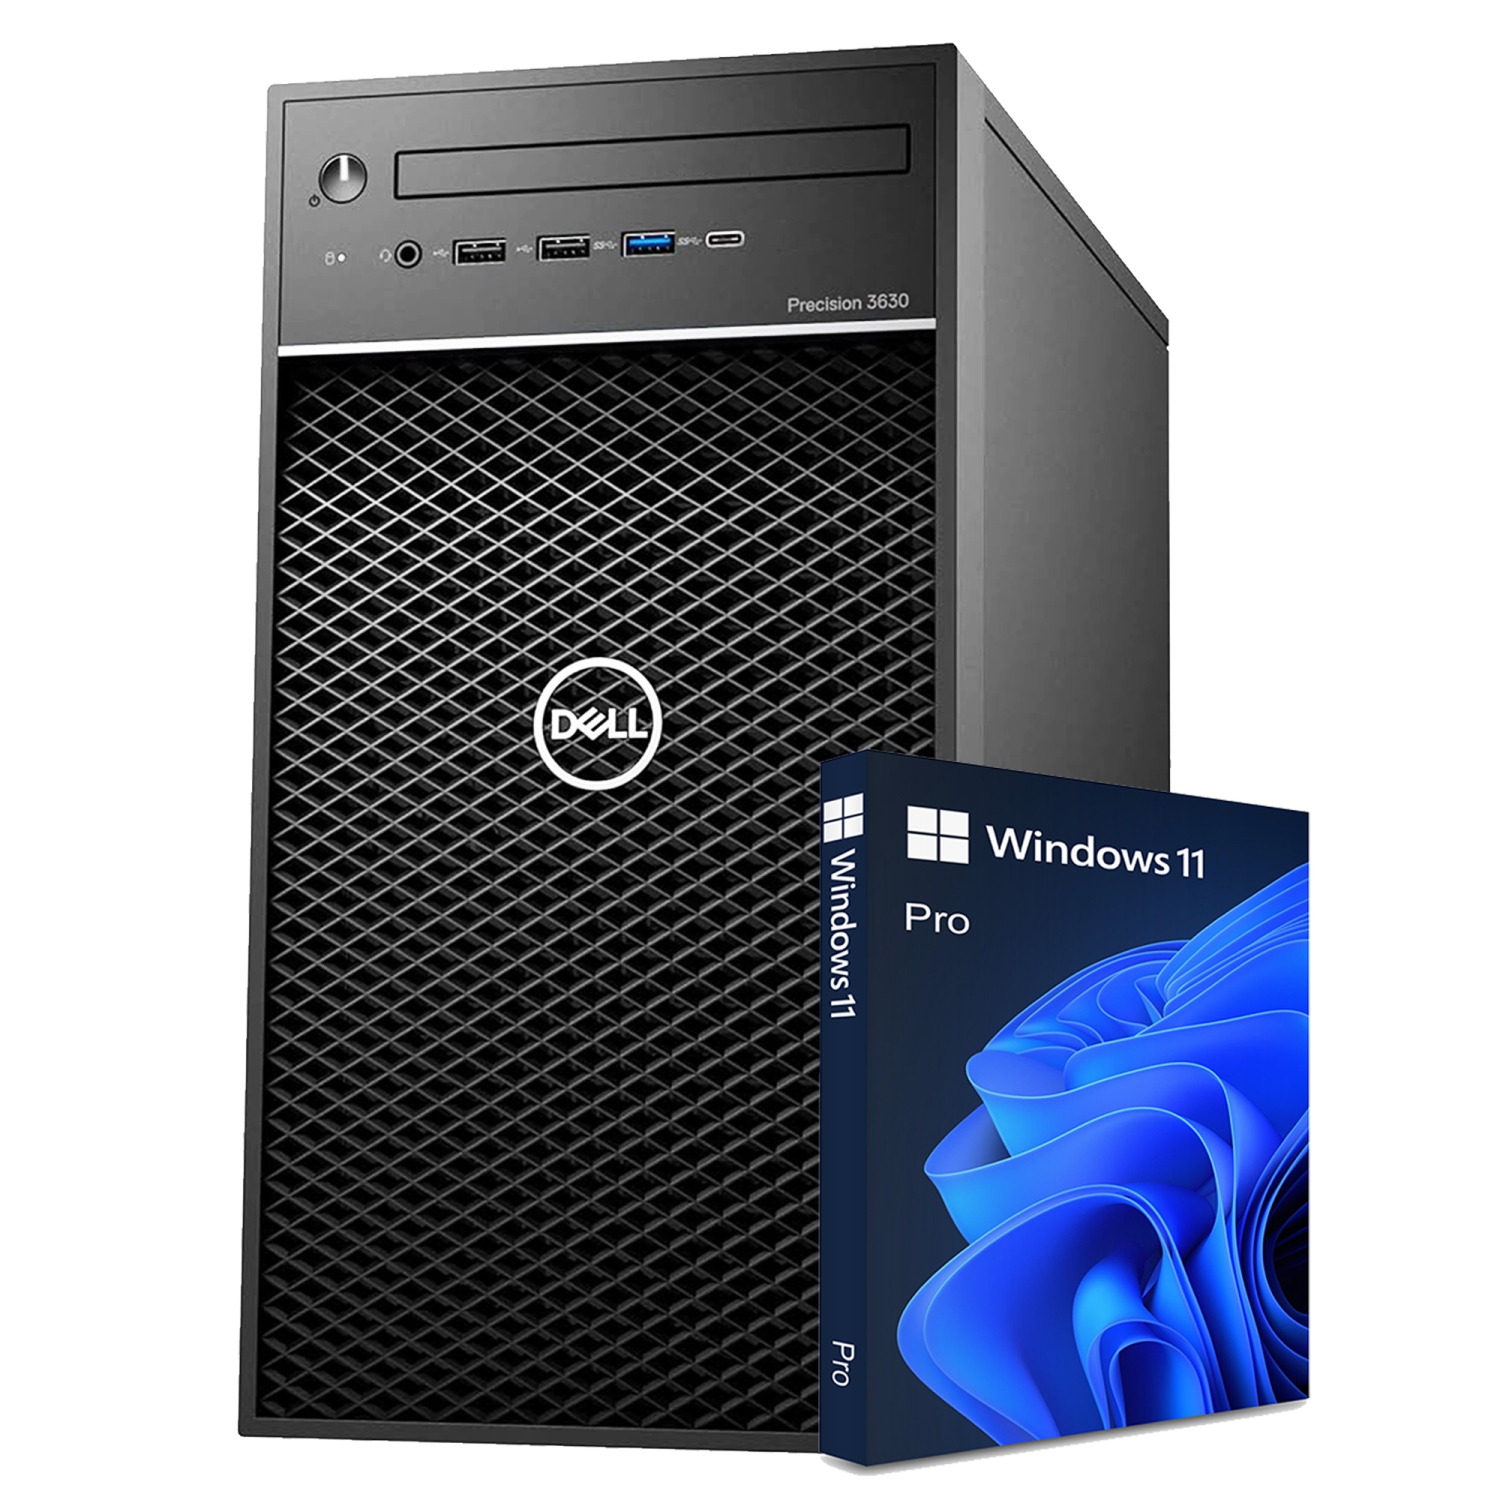 Refurbished (Good) - Desktop Computer PC Dell Precision 3630 Tower/ Windows 11 Pro/ Intel Hexa Core i7-8th Gen Processor/ 32GB DDR4 RAM/ 512GB SSD/ RGB Keyboard and Mouse/ WIFI